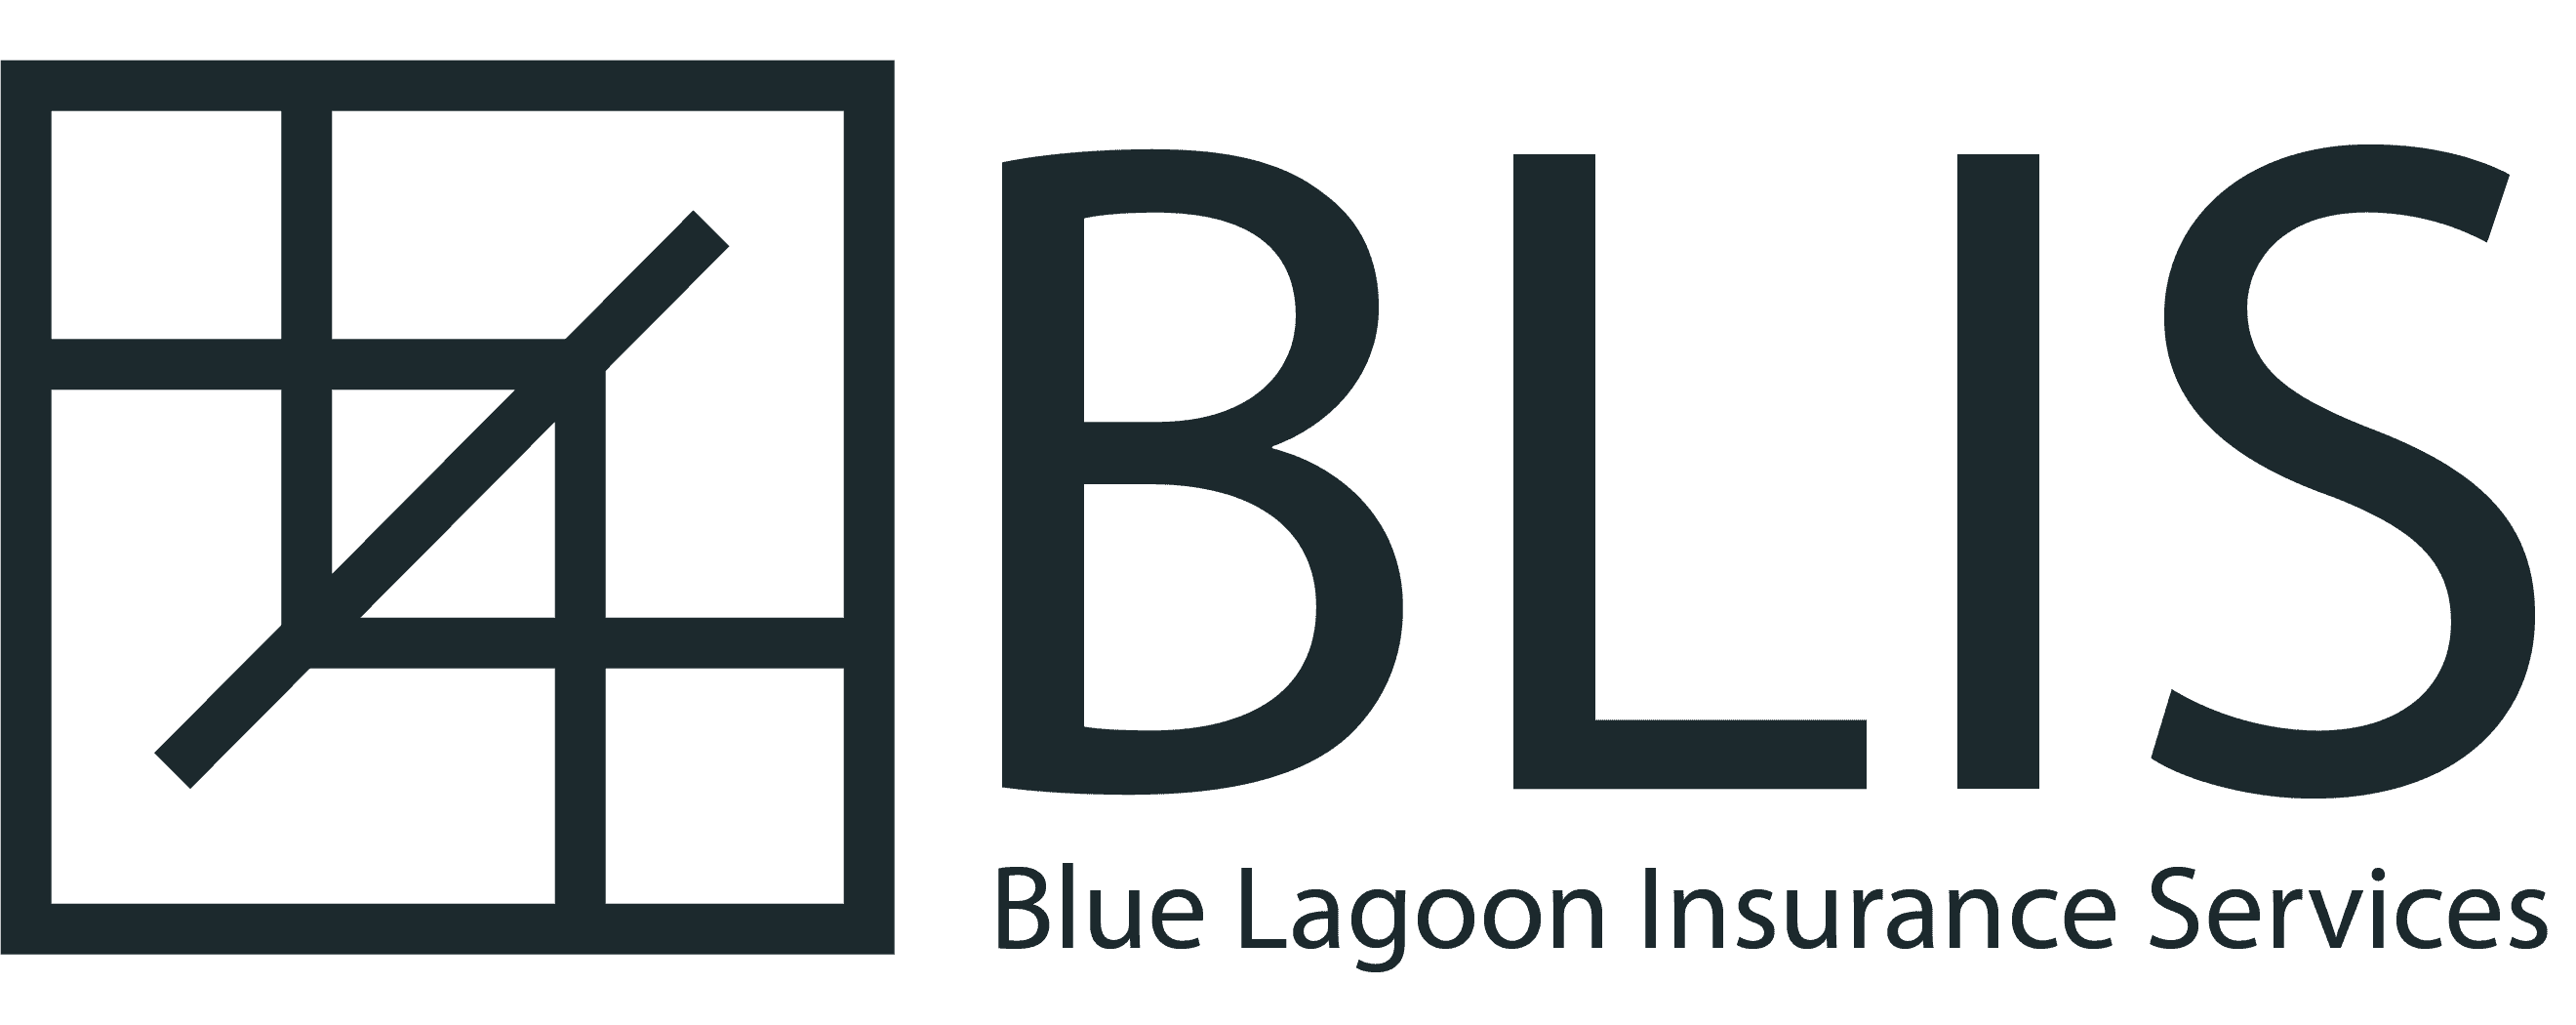 California Insurance Agent - Blue Lagoon Insurance Services